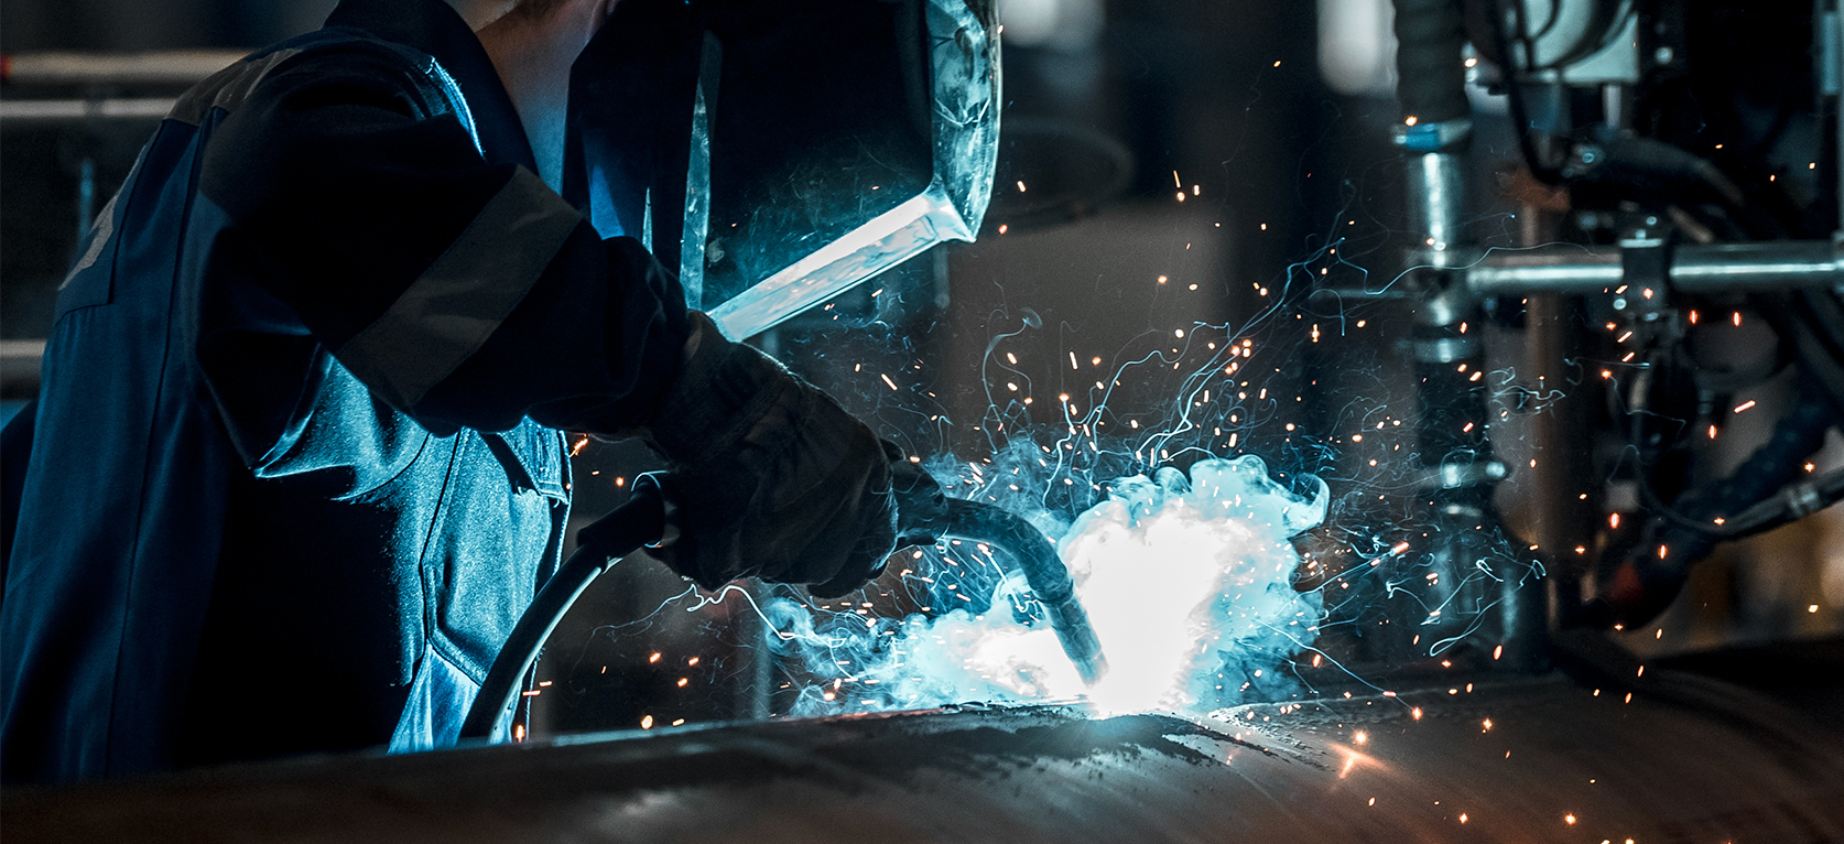 photo: a welder wearing protective gear